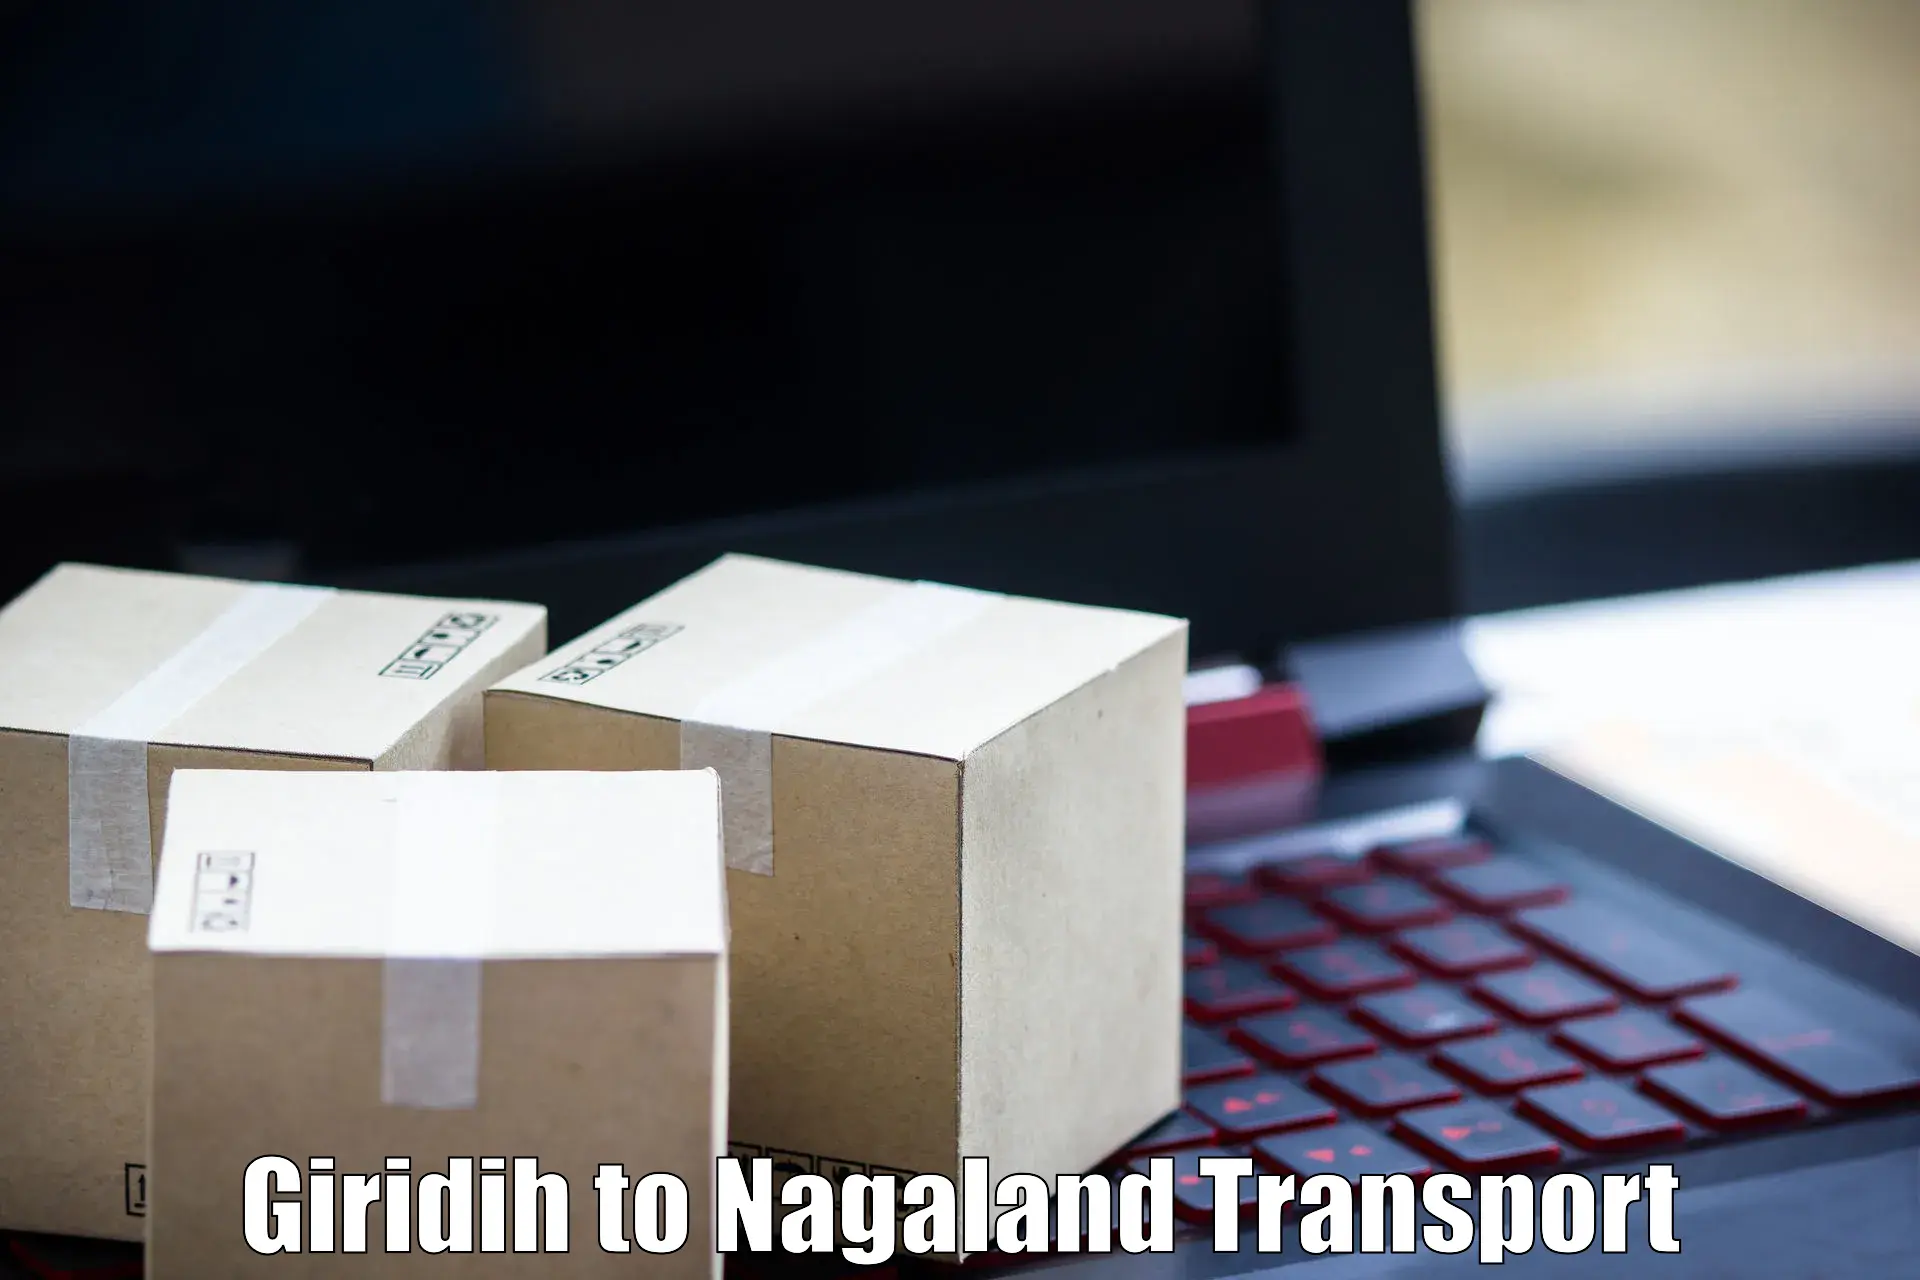 Delivery service Giridih to Dimapur